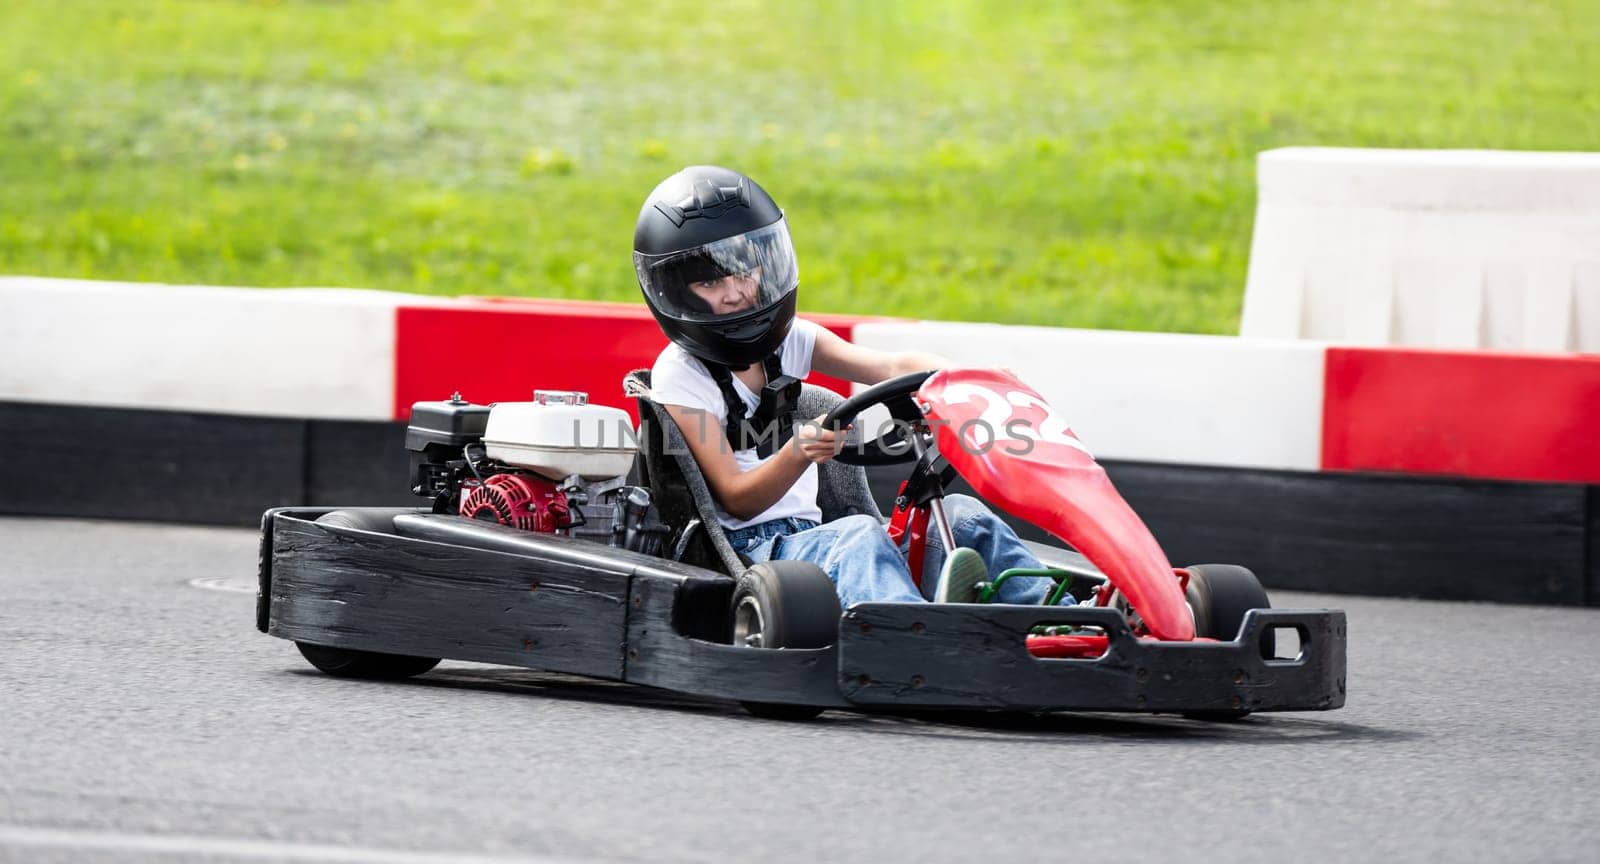 Little Girl Drives Fast Go-Kart By Racing Track by GekaSkr